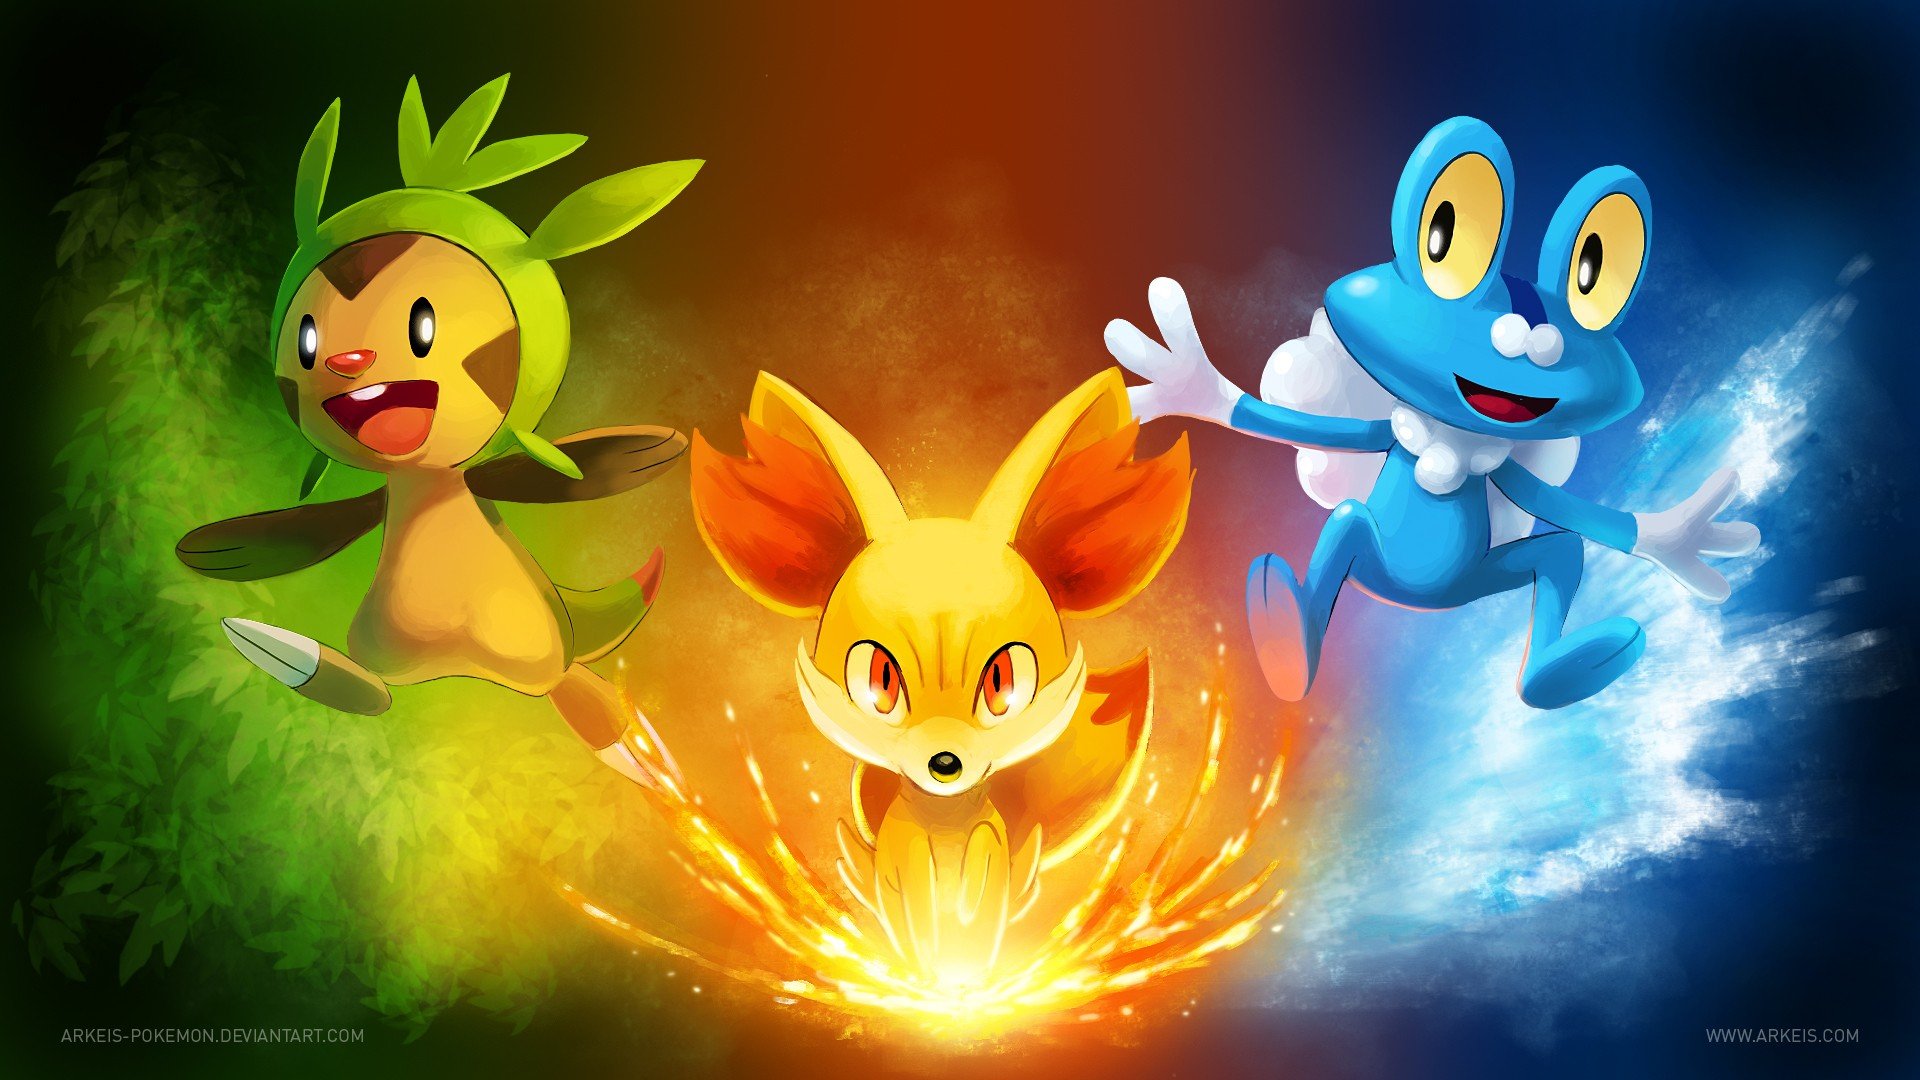 Pokemon Wallpapers - Top Best Pokemon Backgrounds Download